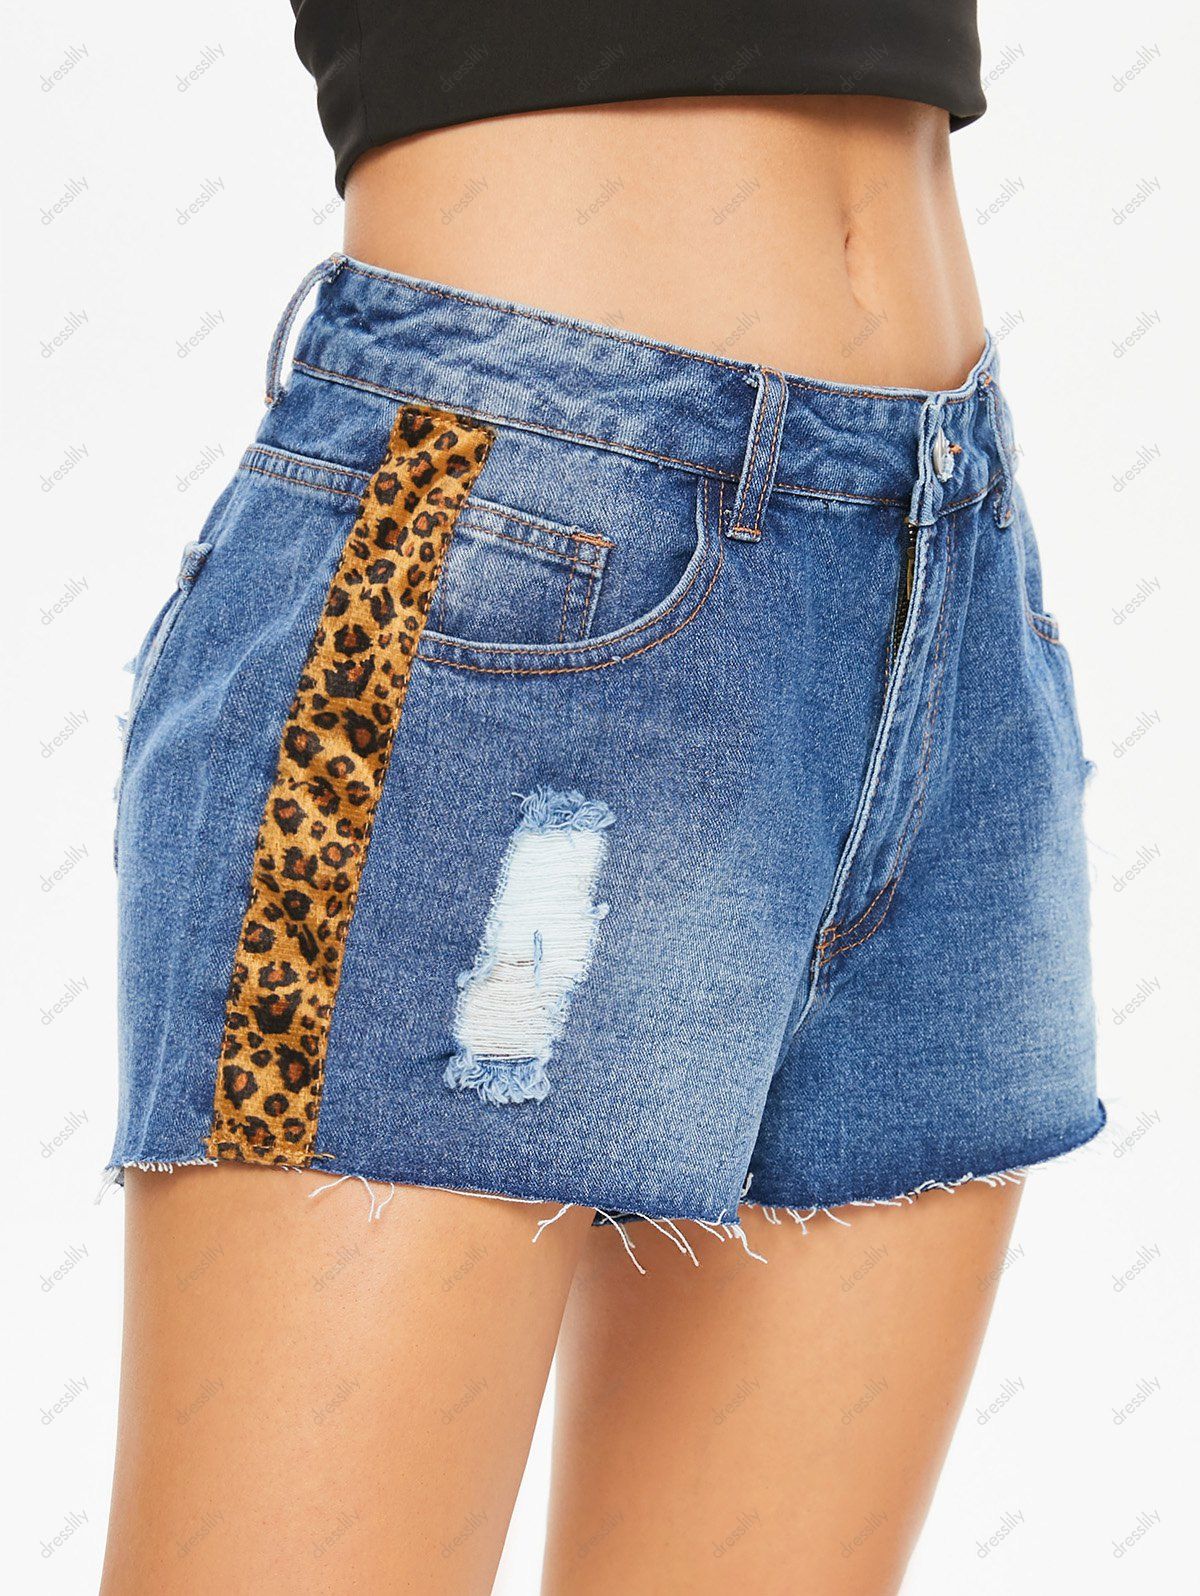 Short Jeans Leopard Print Insert Ripped Pockets Zipper Fly Skinny Summer Denim Shorts 